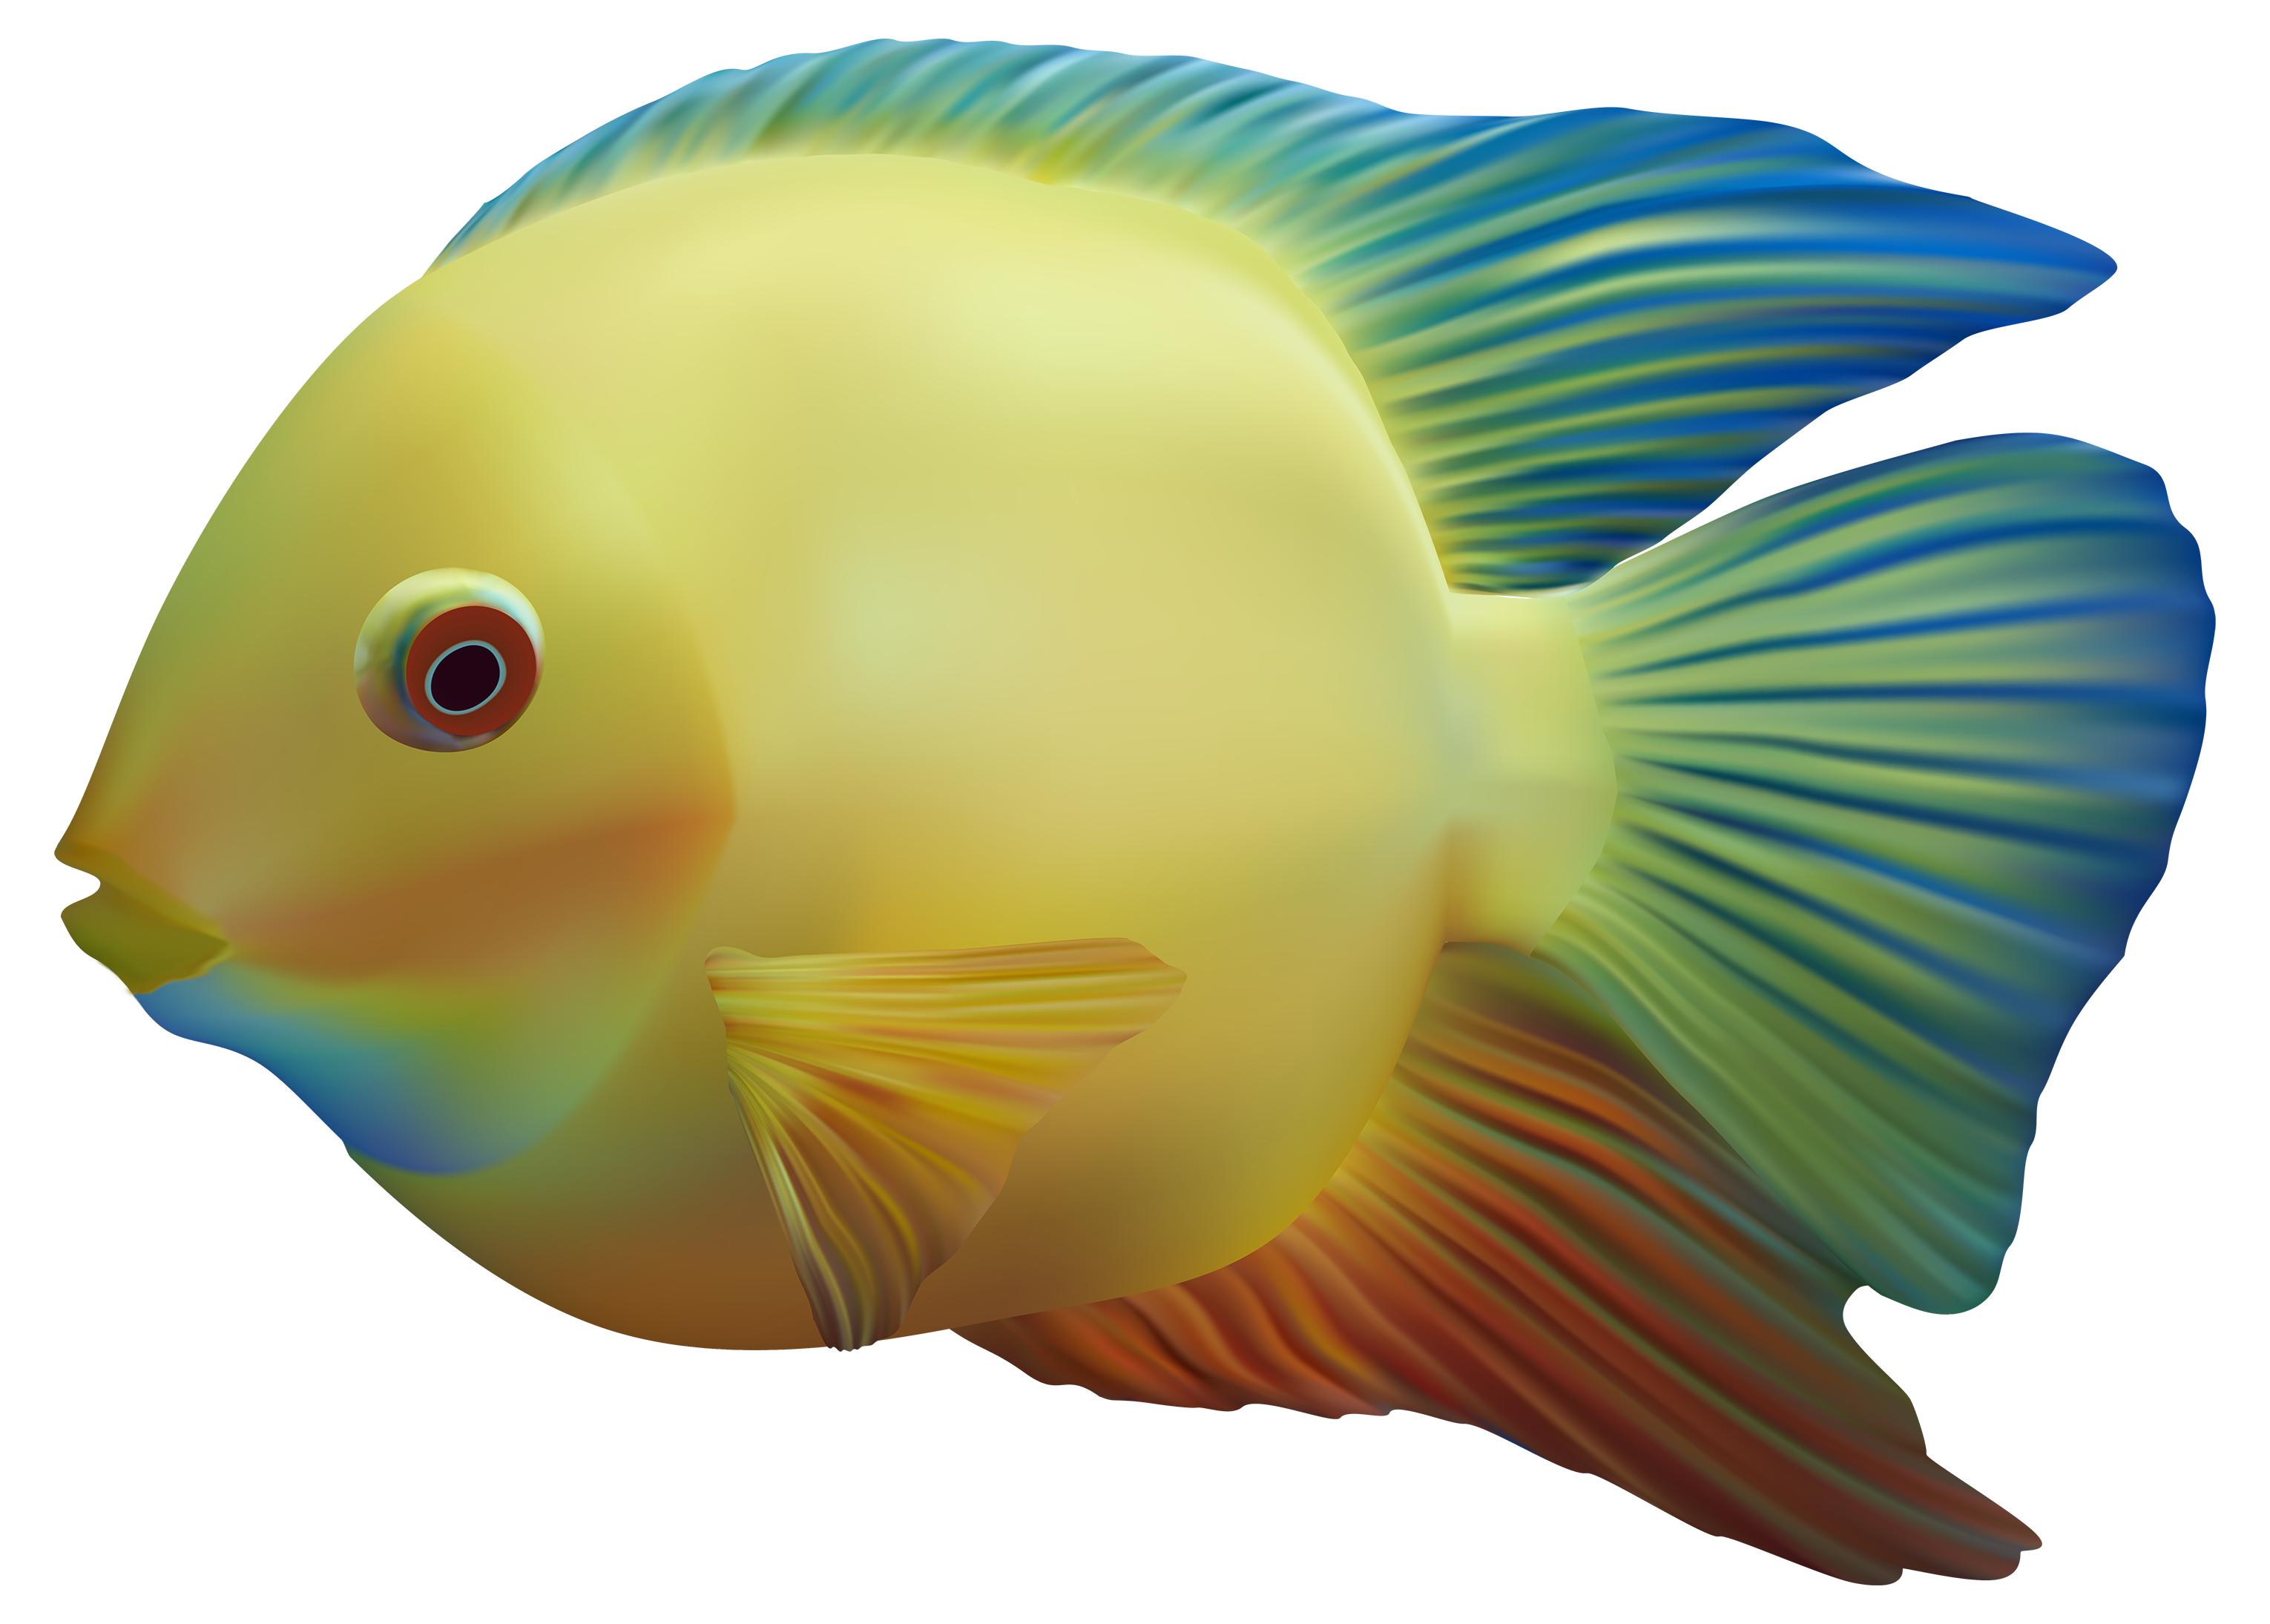 transparent background fish